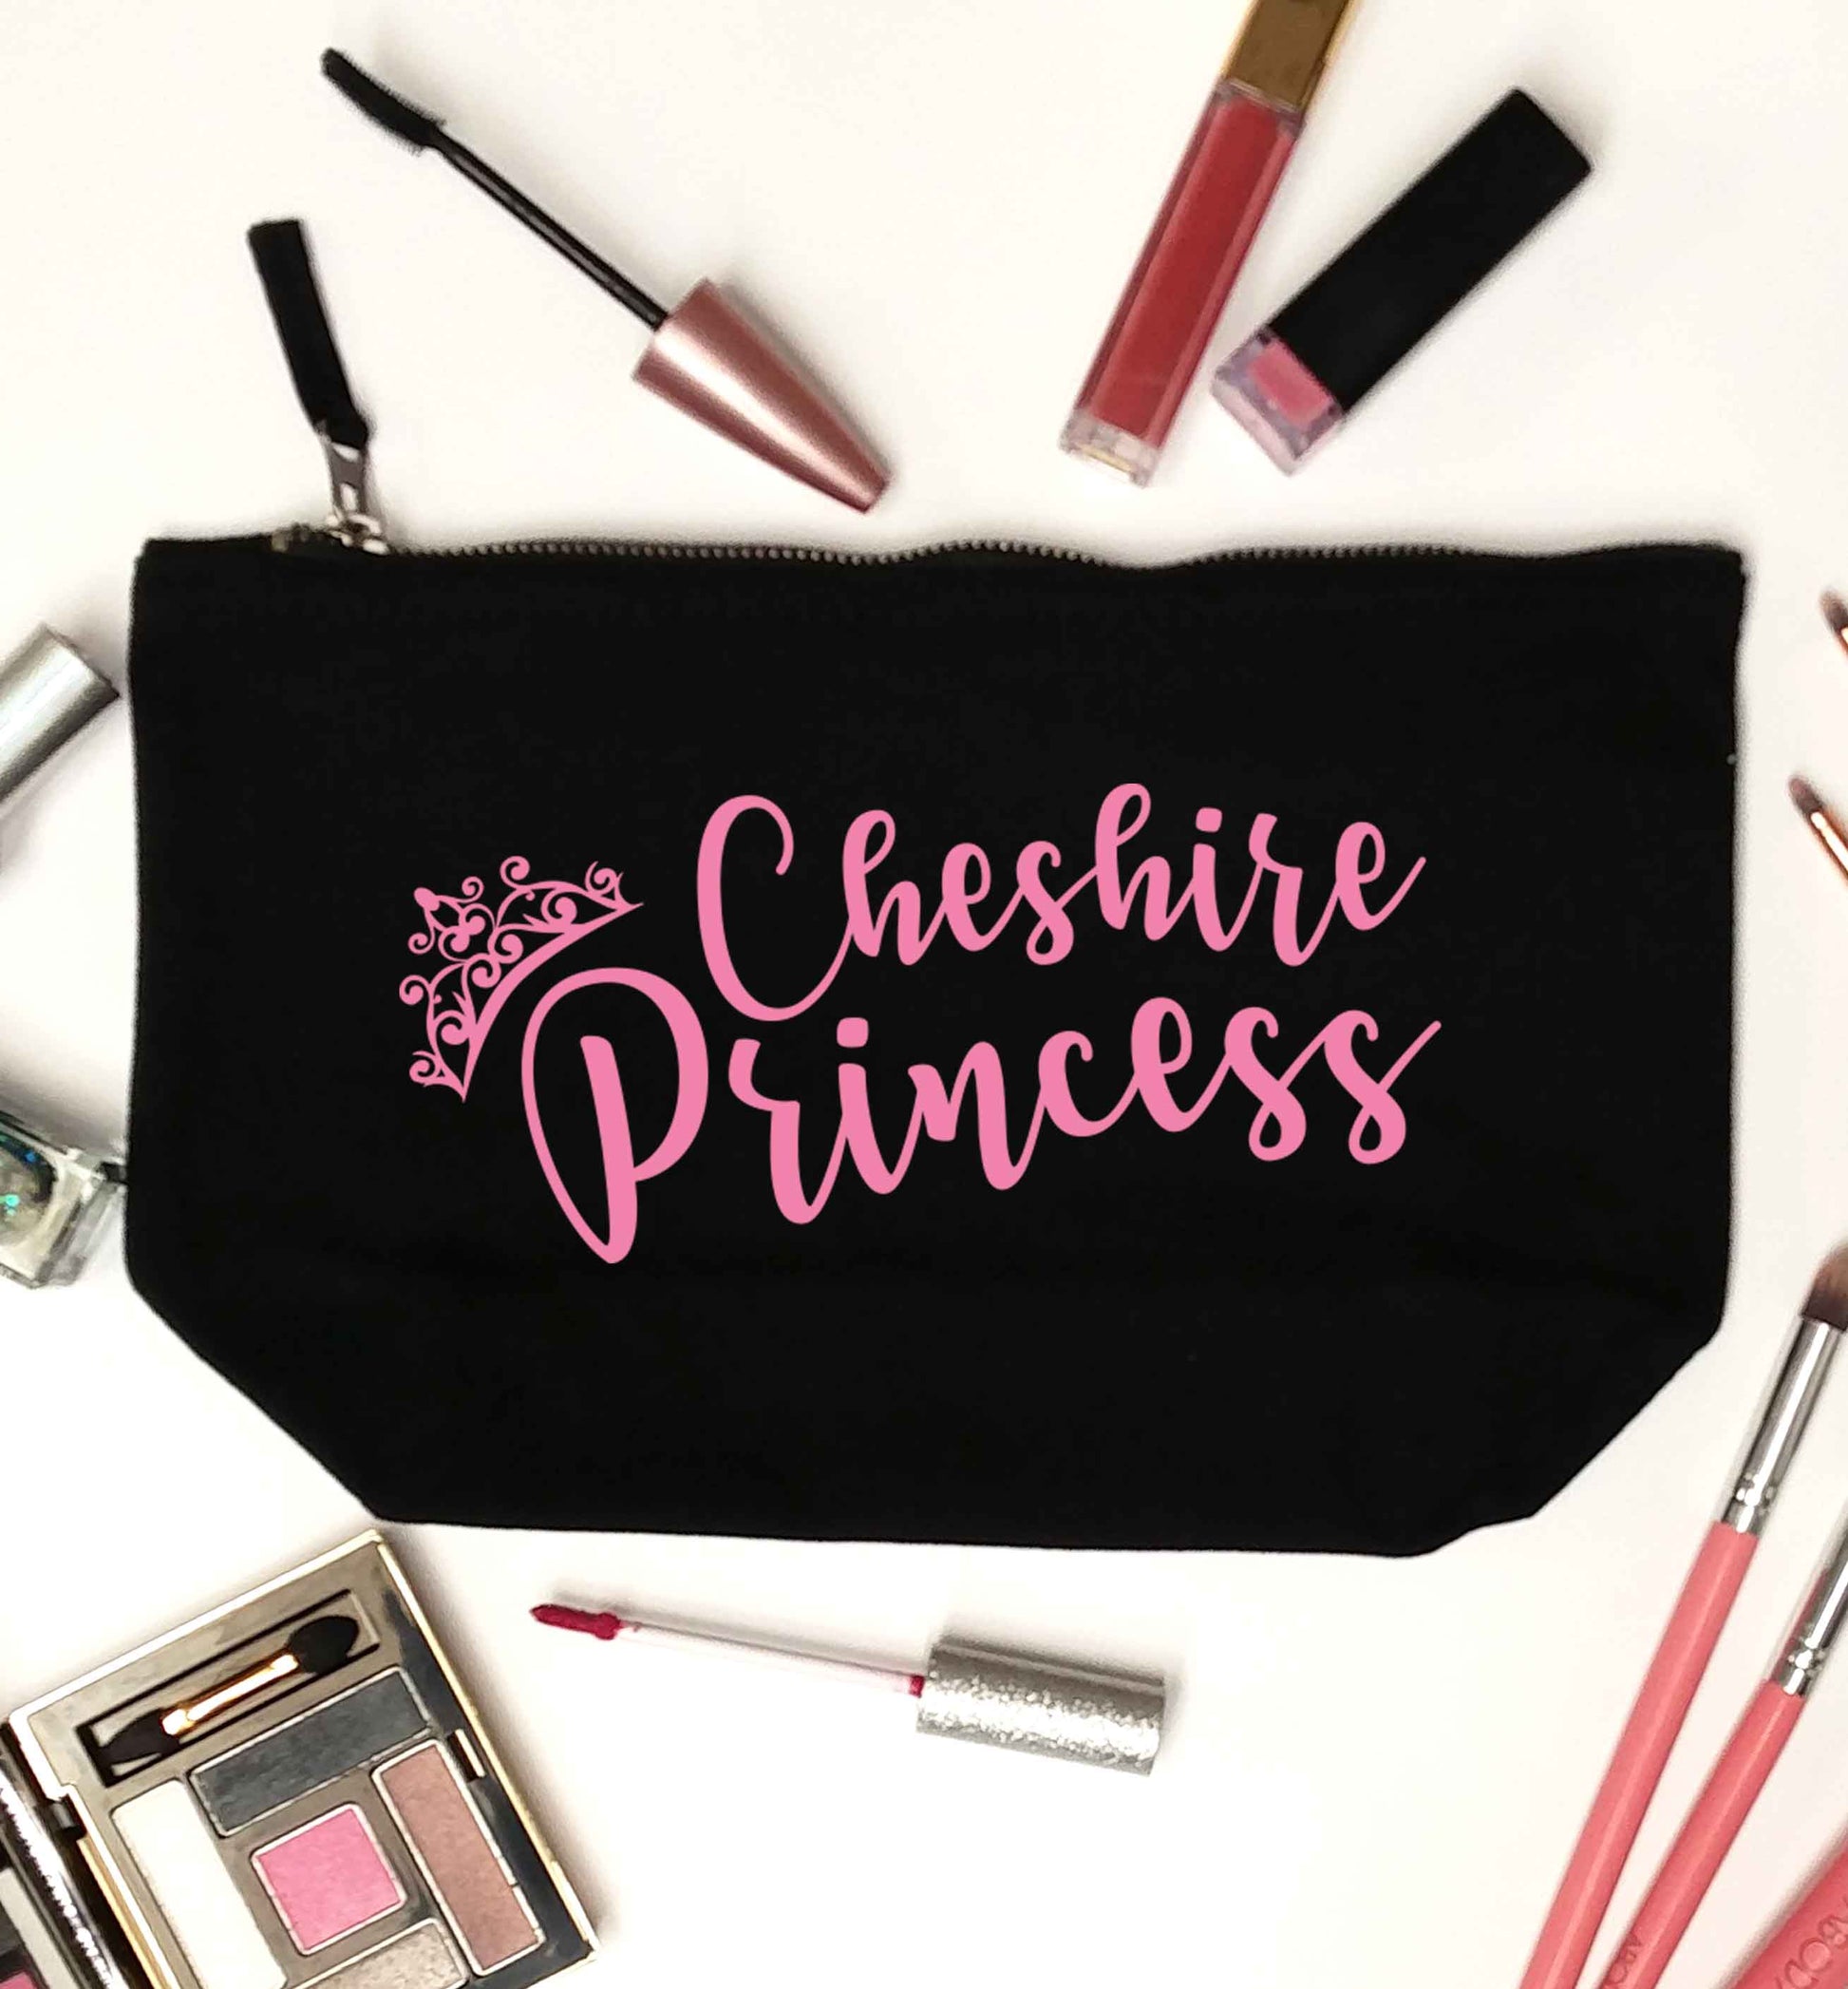 Cheshire princess black makeup bag